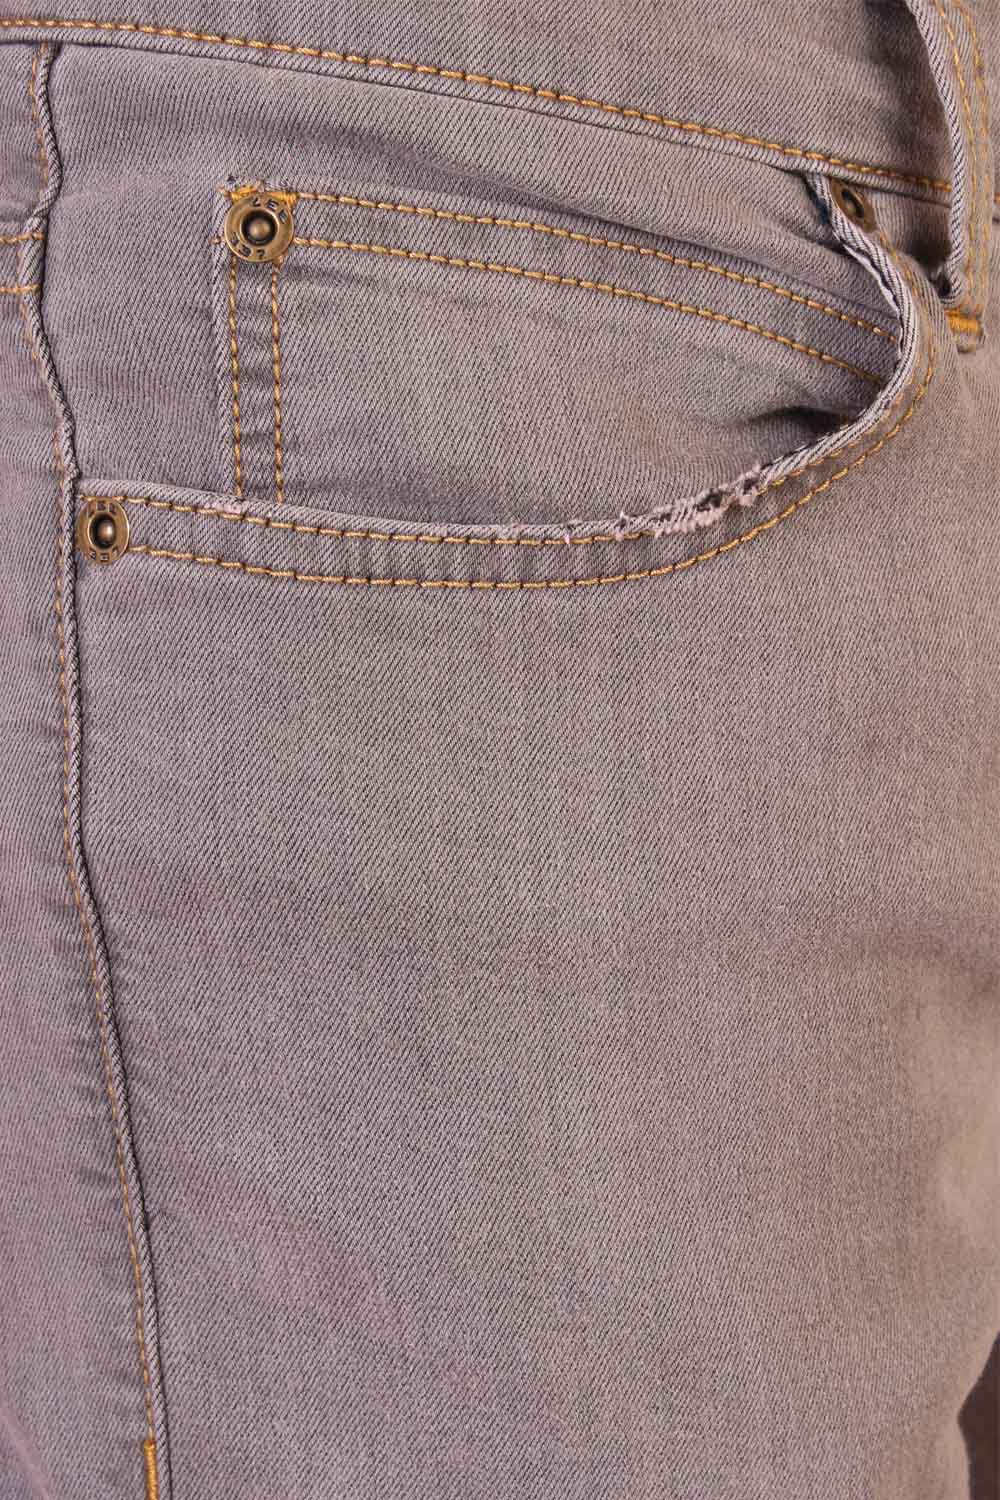 Buy Lee Men's Black Skinny Fit Jeans Online @ ₹1150 from ShopClues